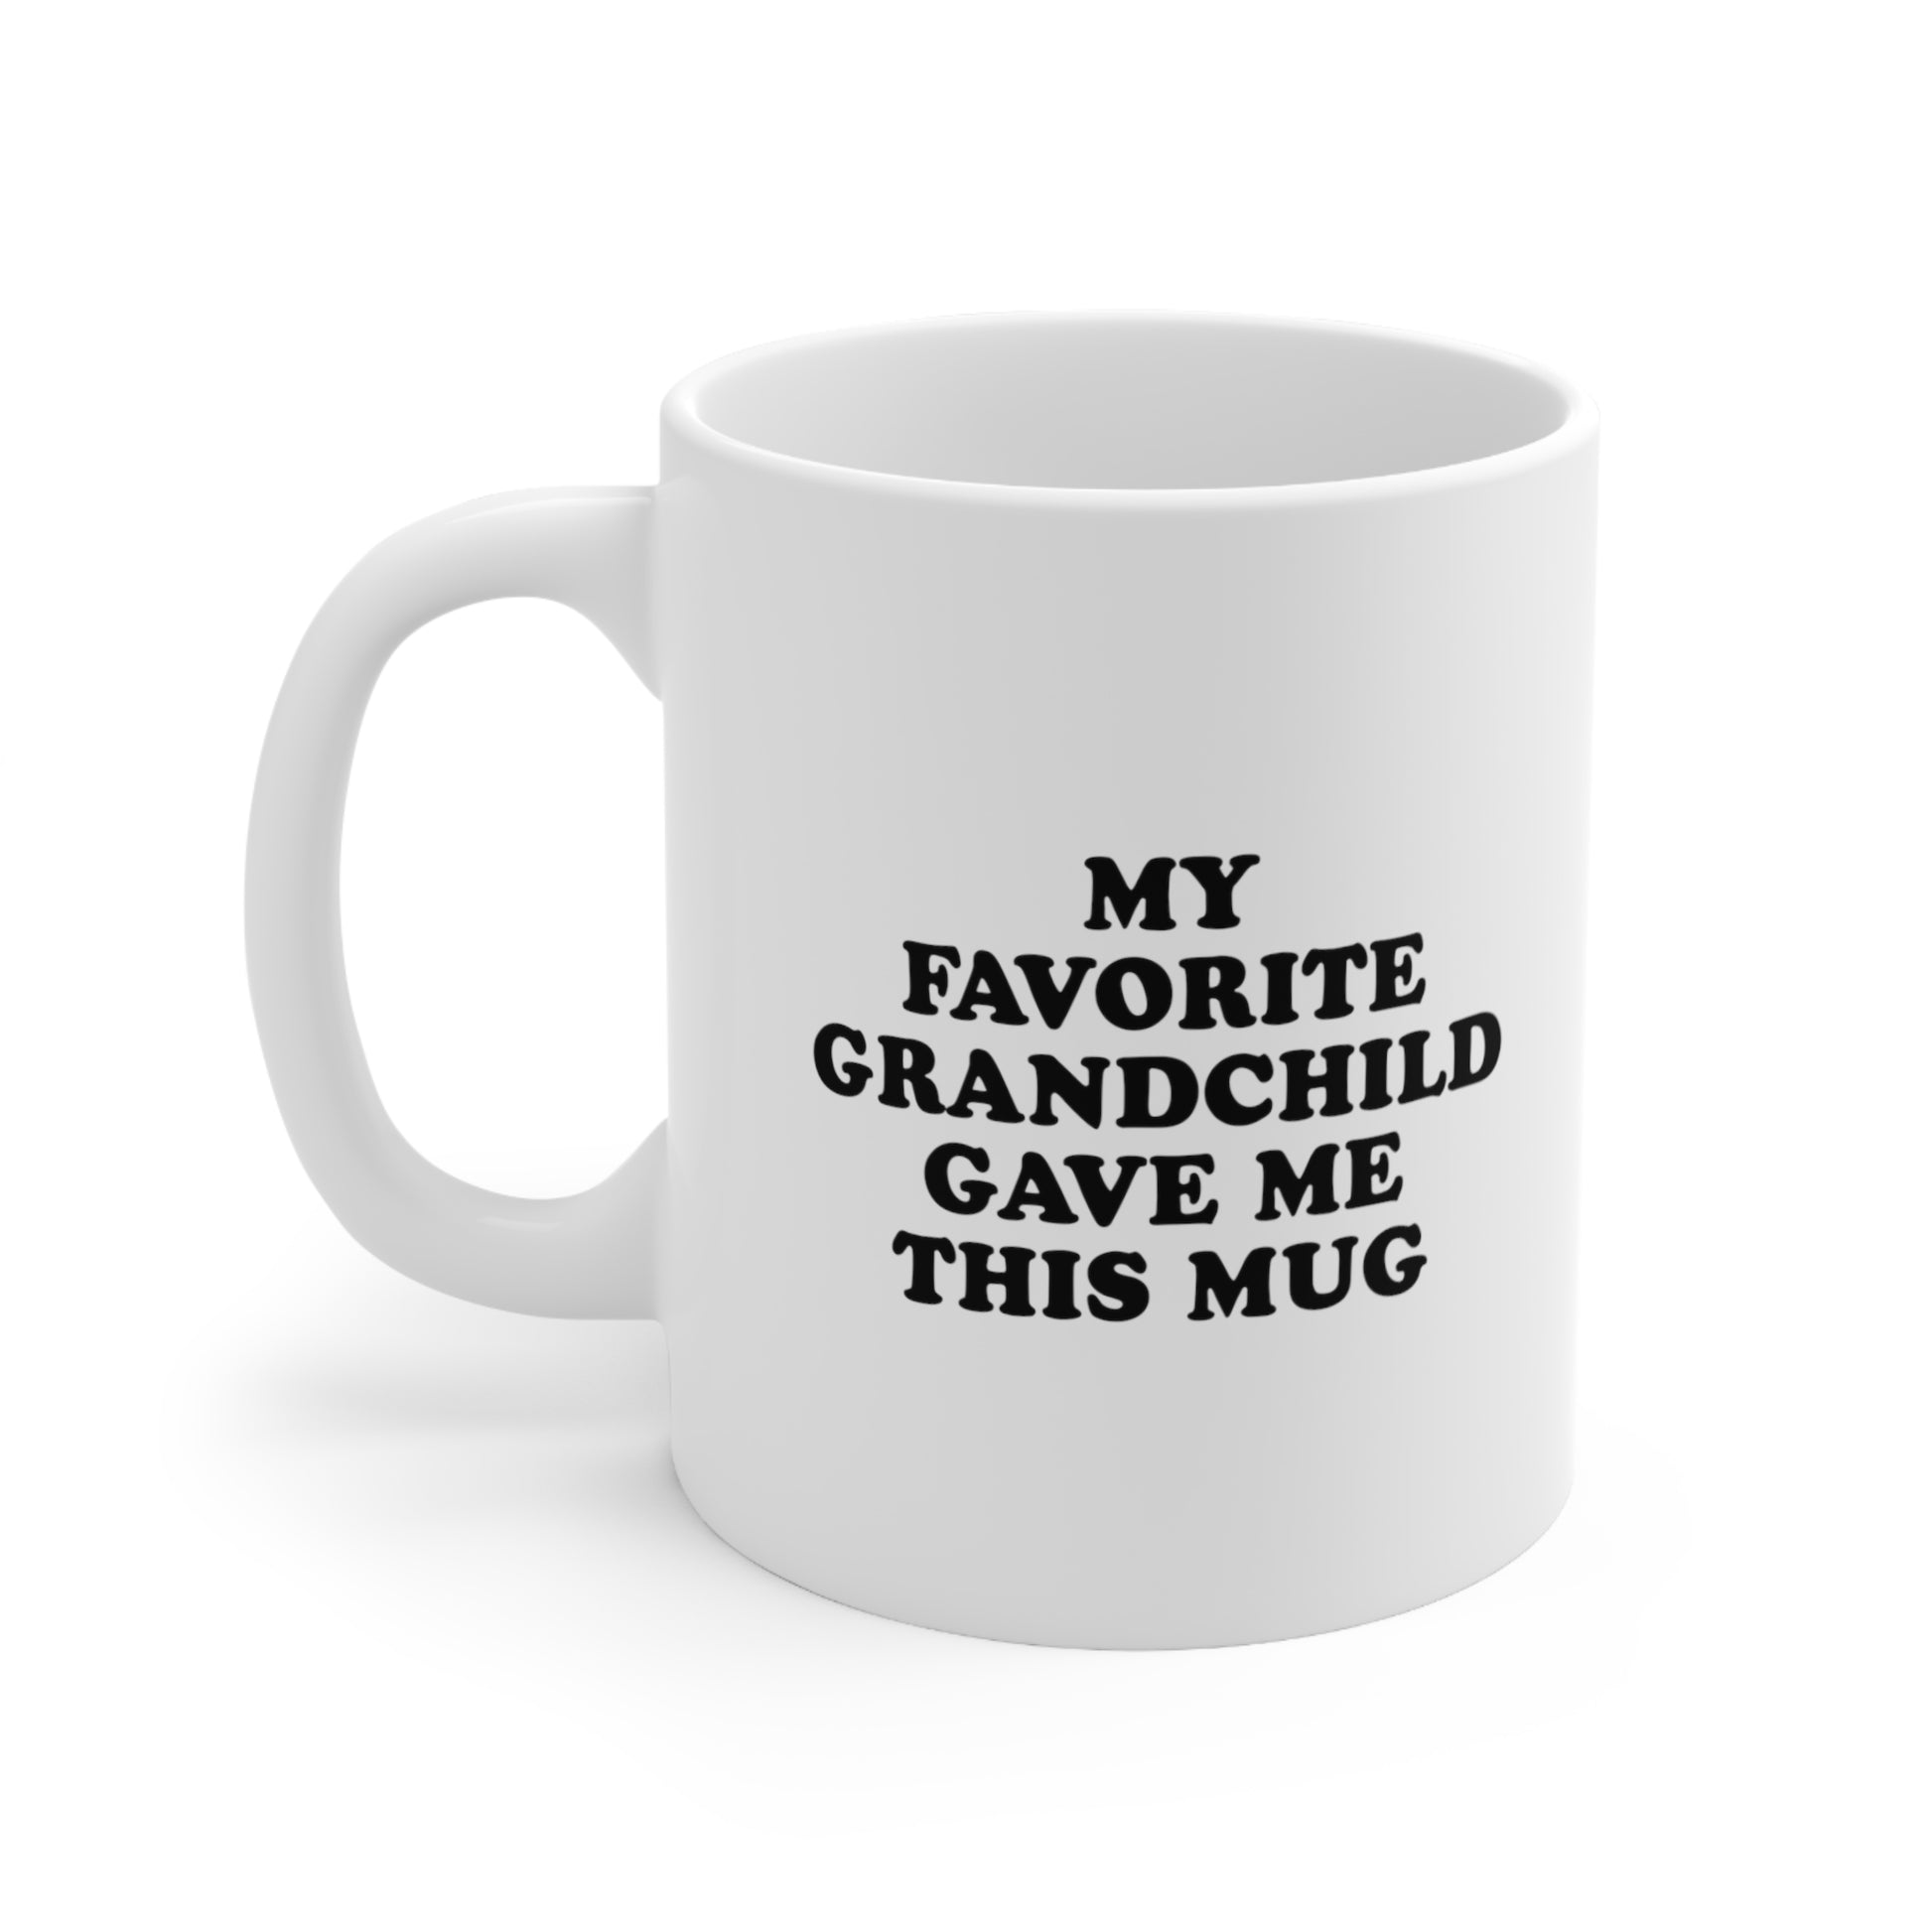 My Favorite Grandchild Gave Me This Mug Coffee Cup